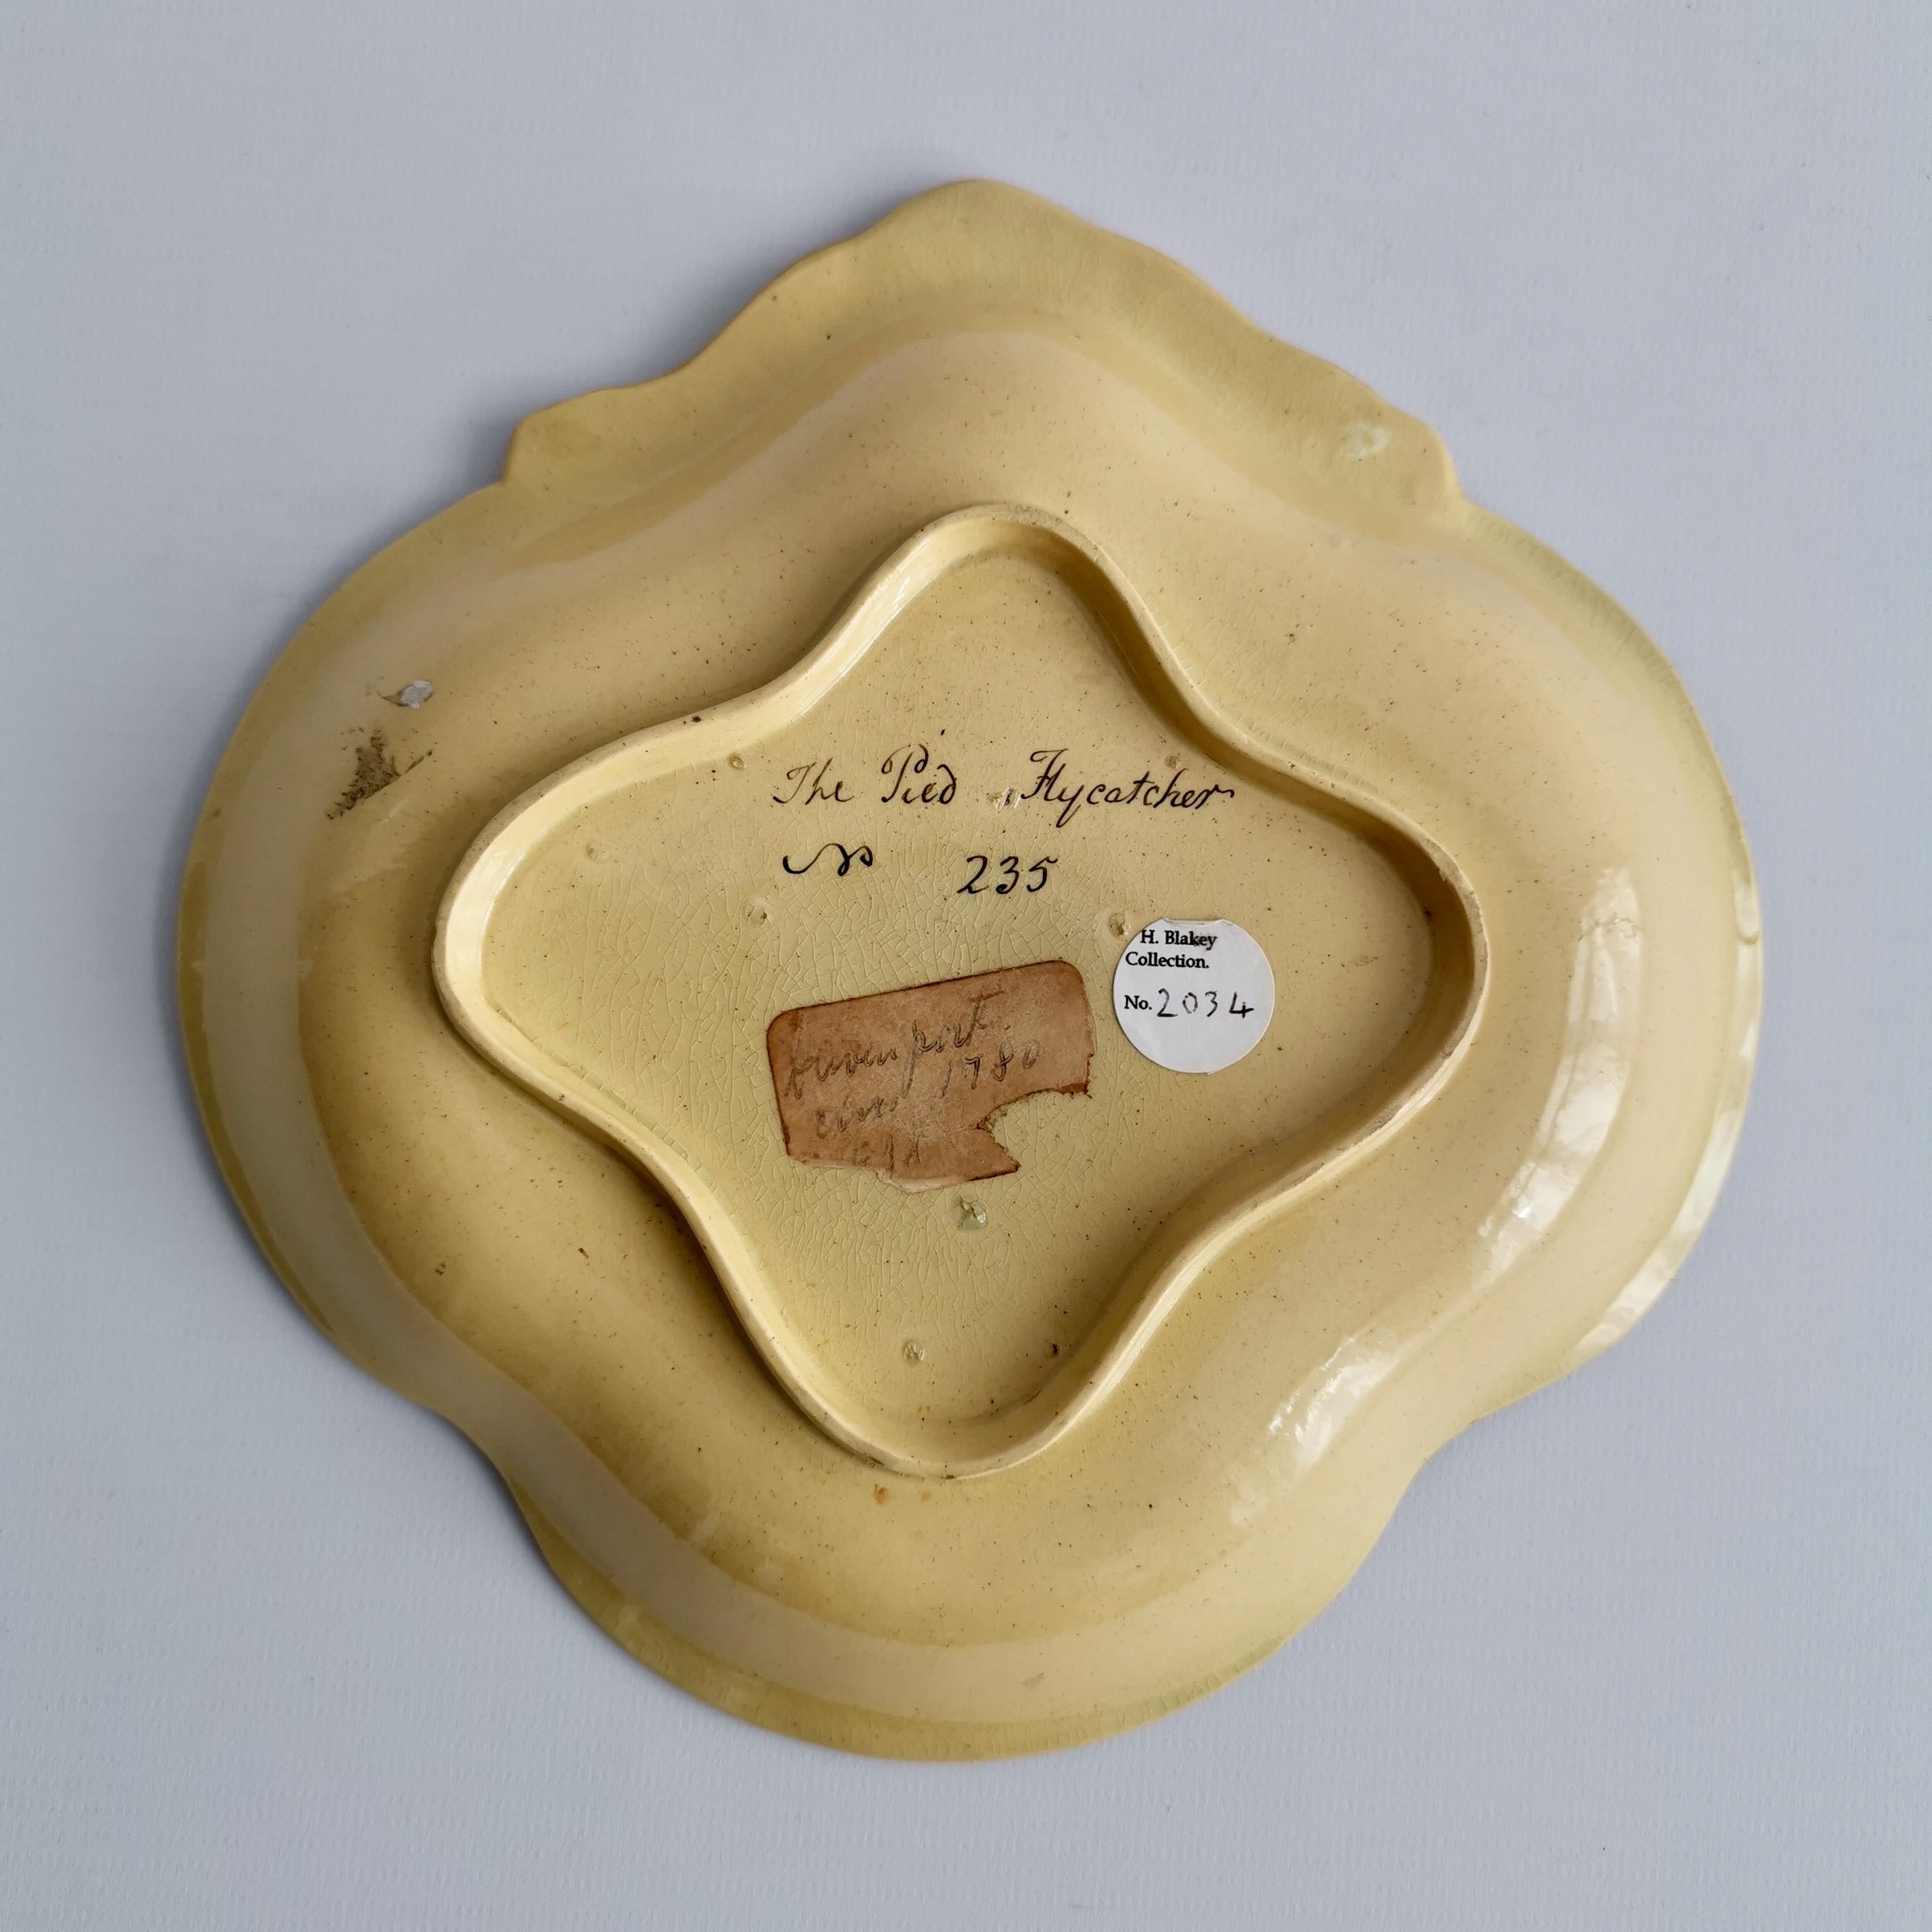 Earthenware Ridgway Drabware Shell Dish with Bird After Bewick, Beige, Ochre, Regency 1808